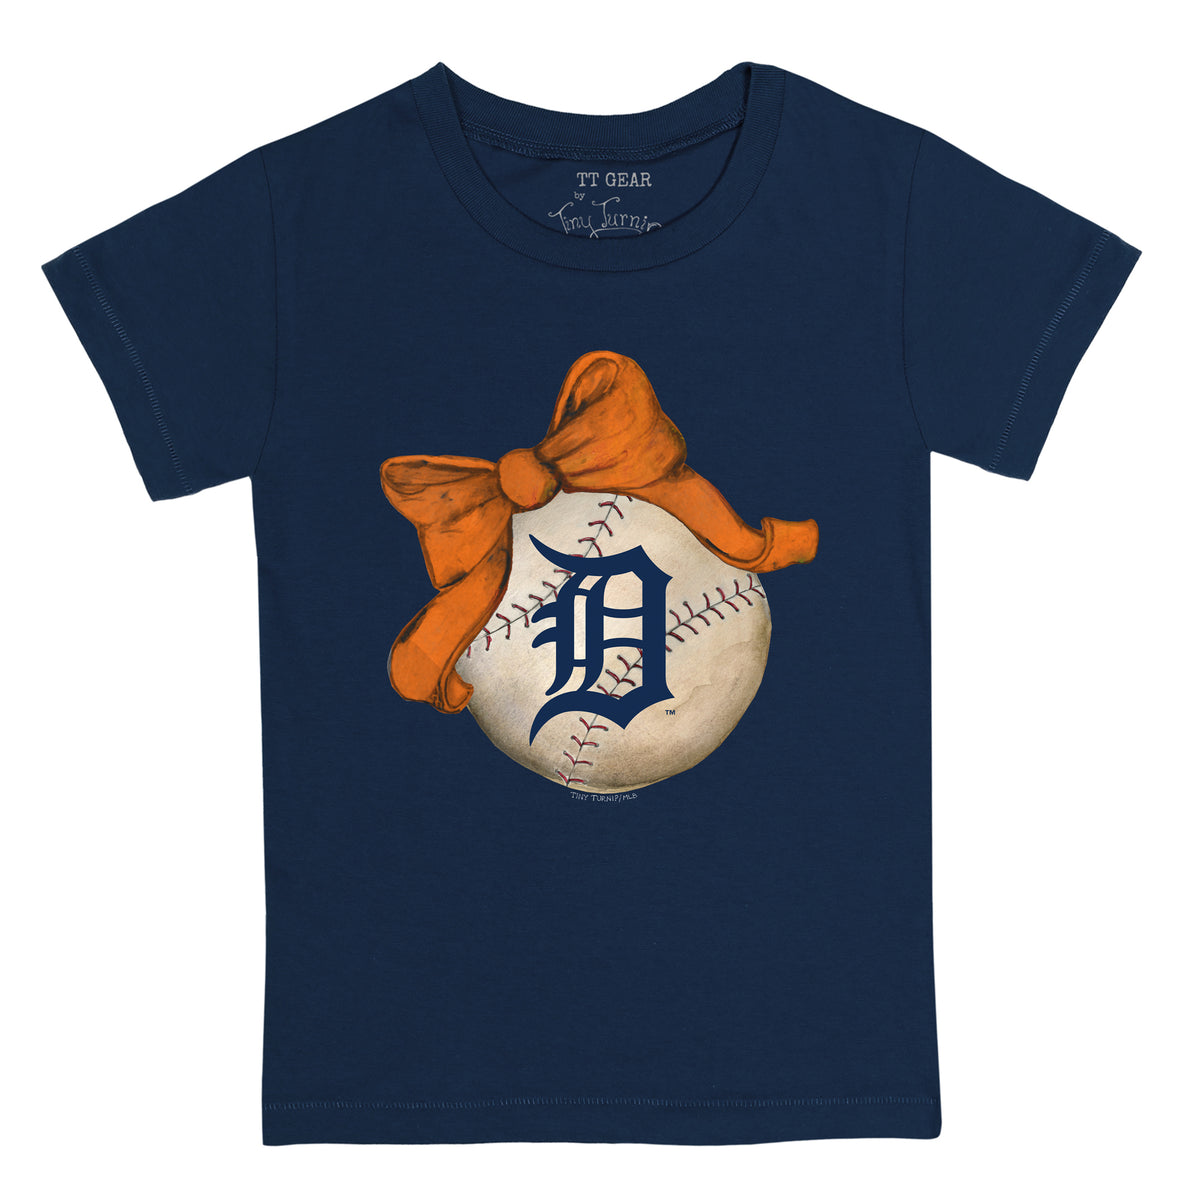 Tiny Turnip Detroit Tigers Hot Bats Tee Shirt Women's Medium / White